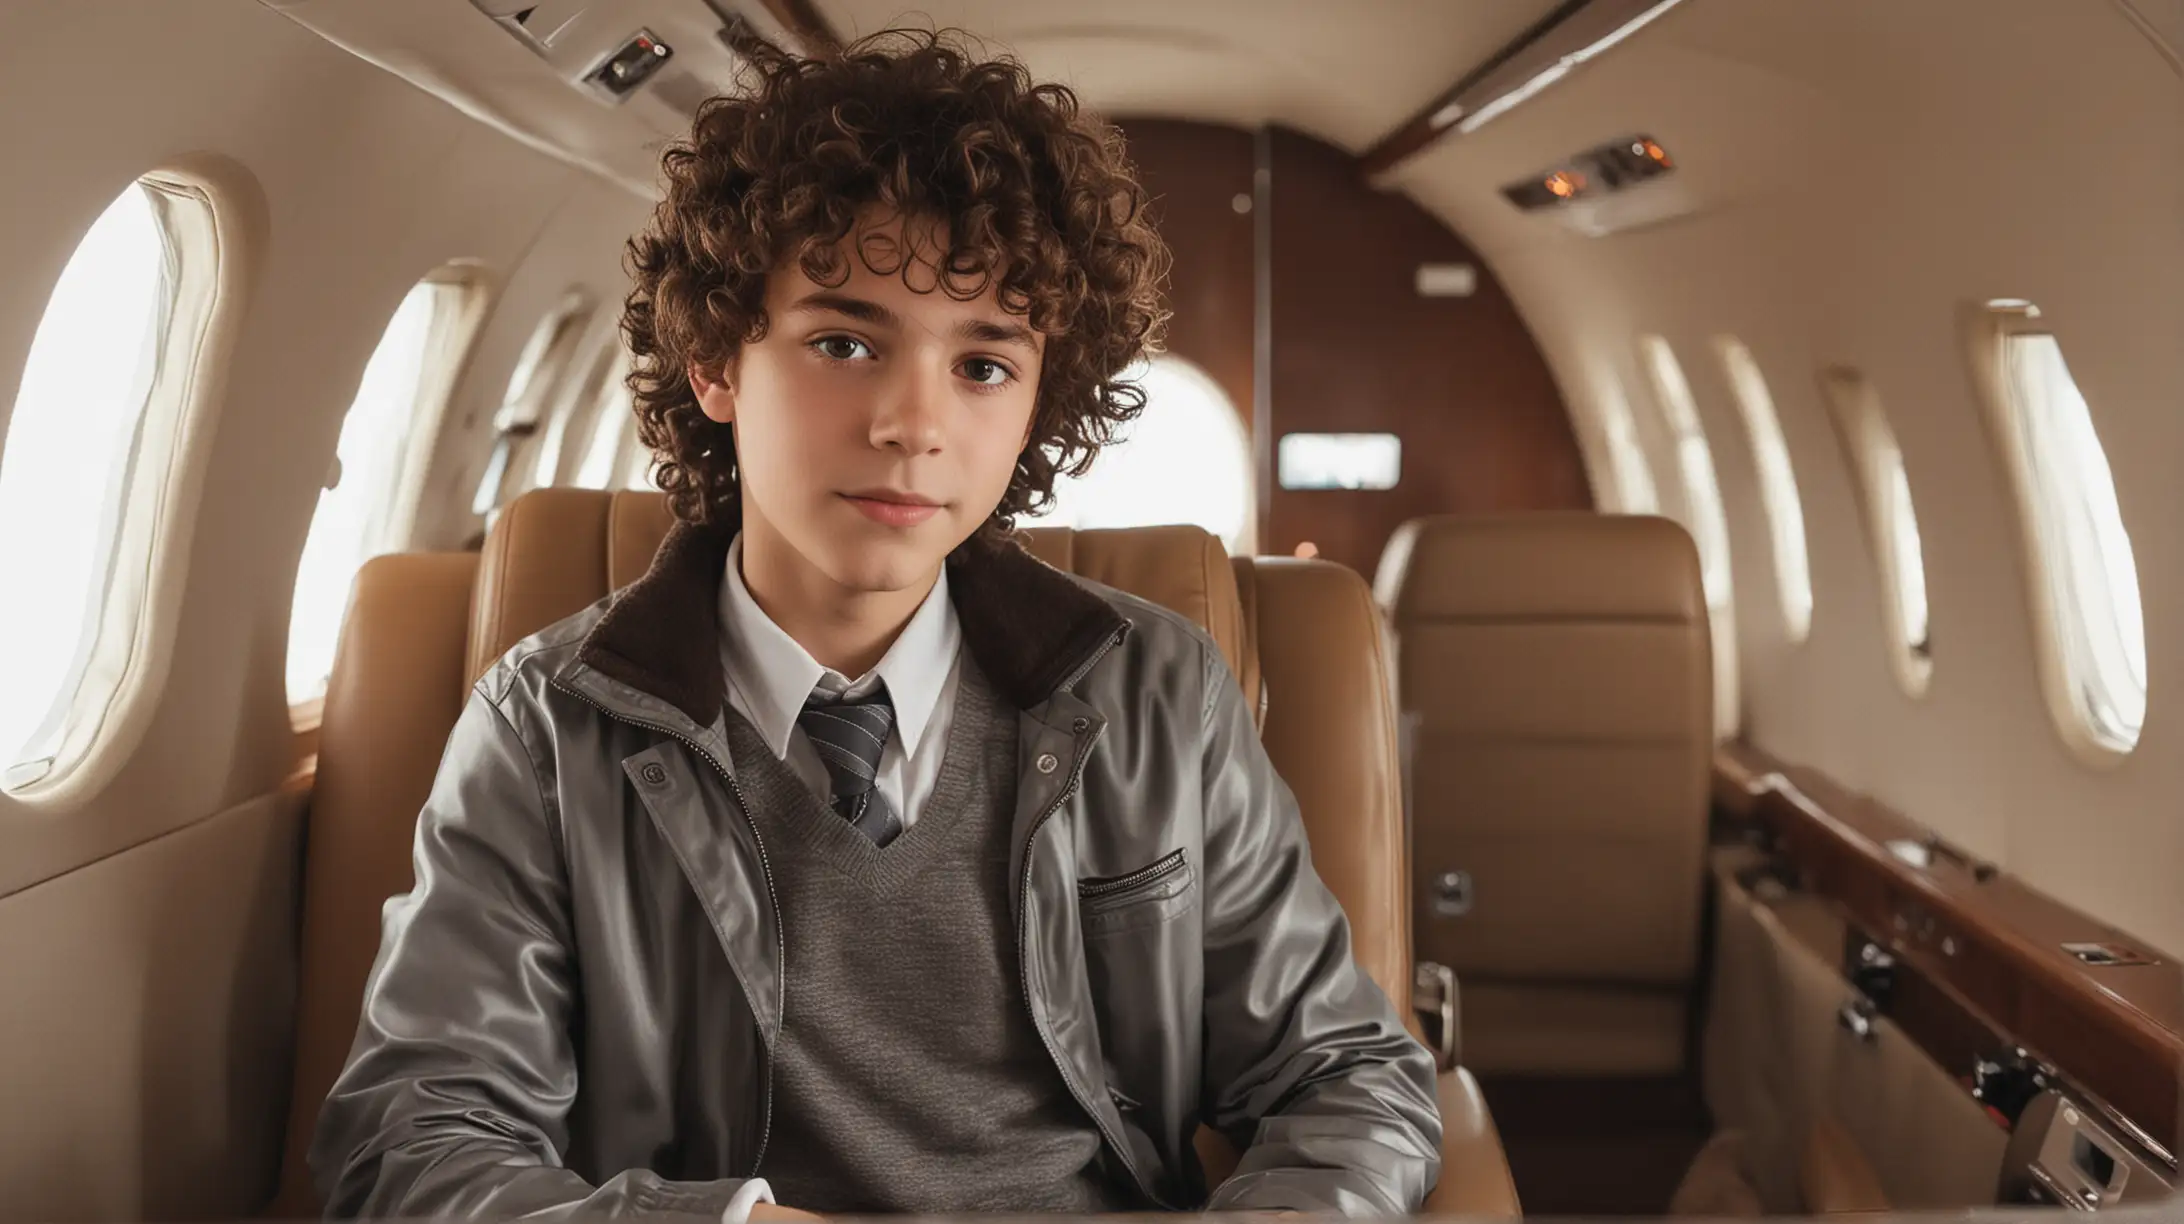 Curly Hair Boy Enjoying Luxury Travel Inside Private Jet